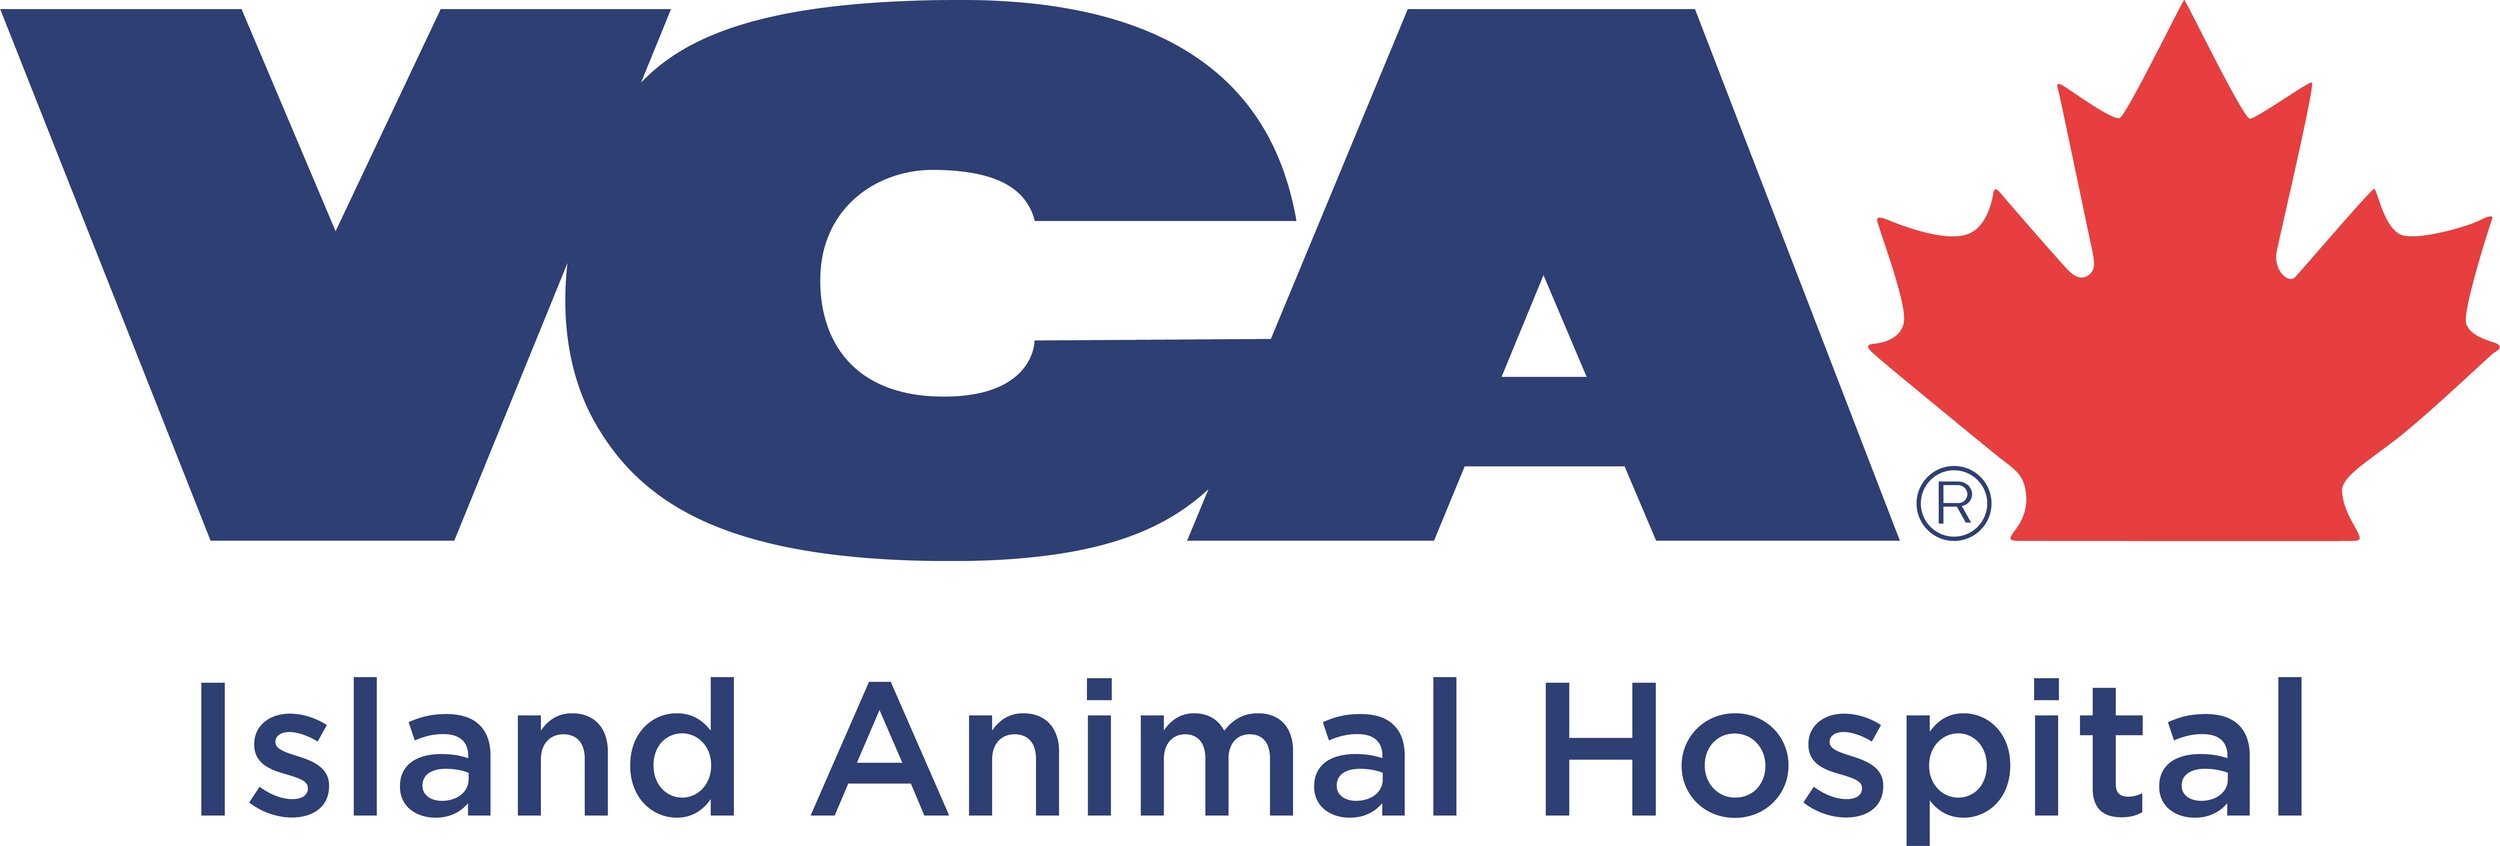 VCA_Island Animal Hospital logo.jpg